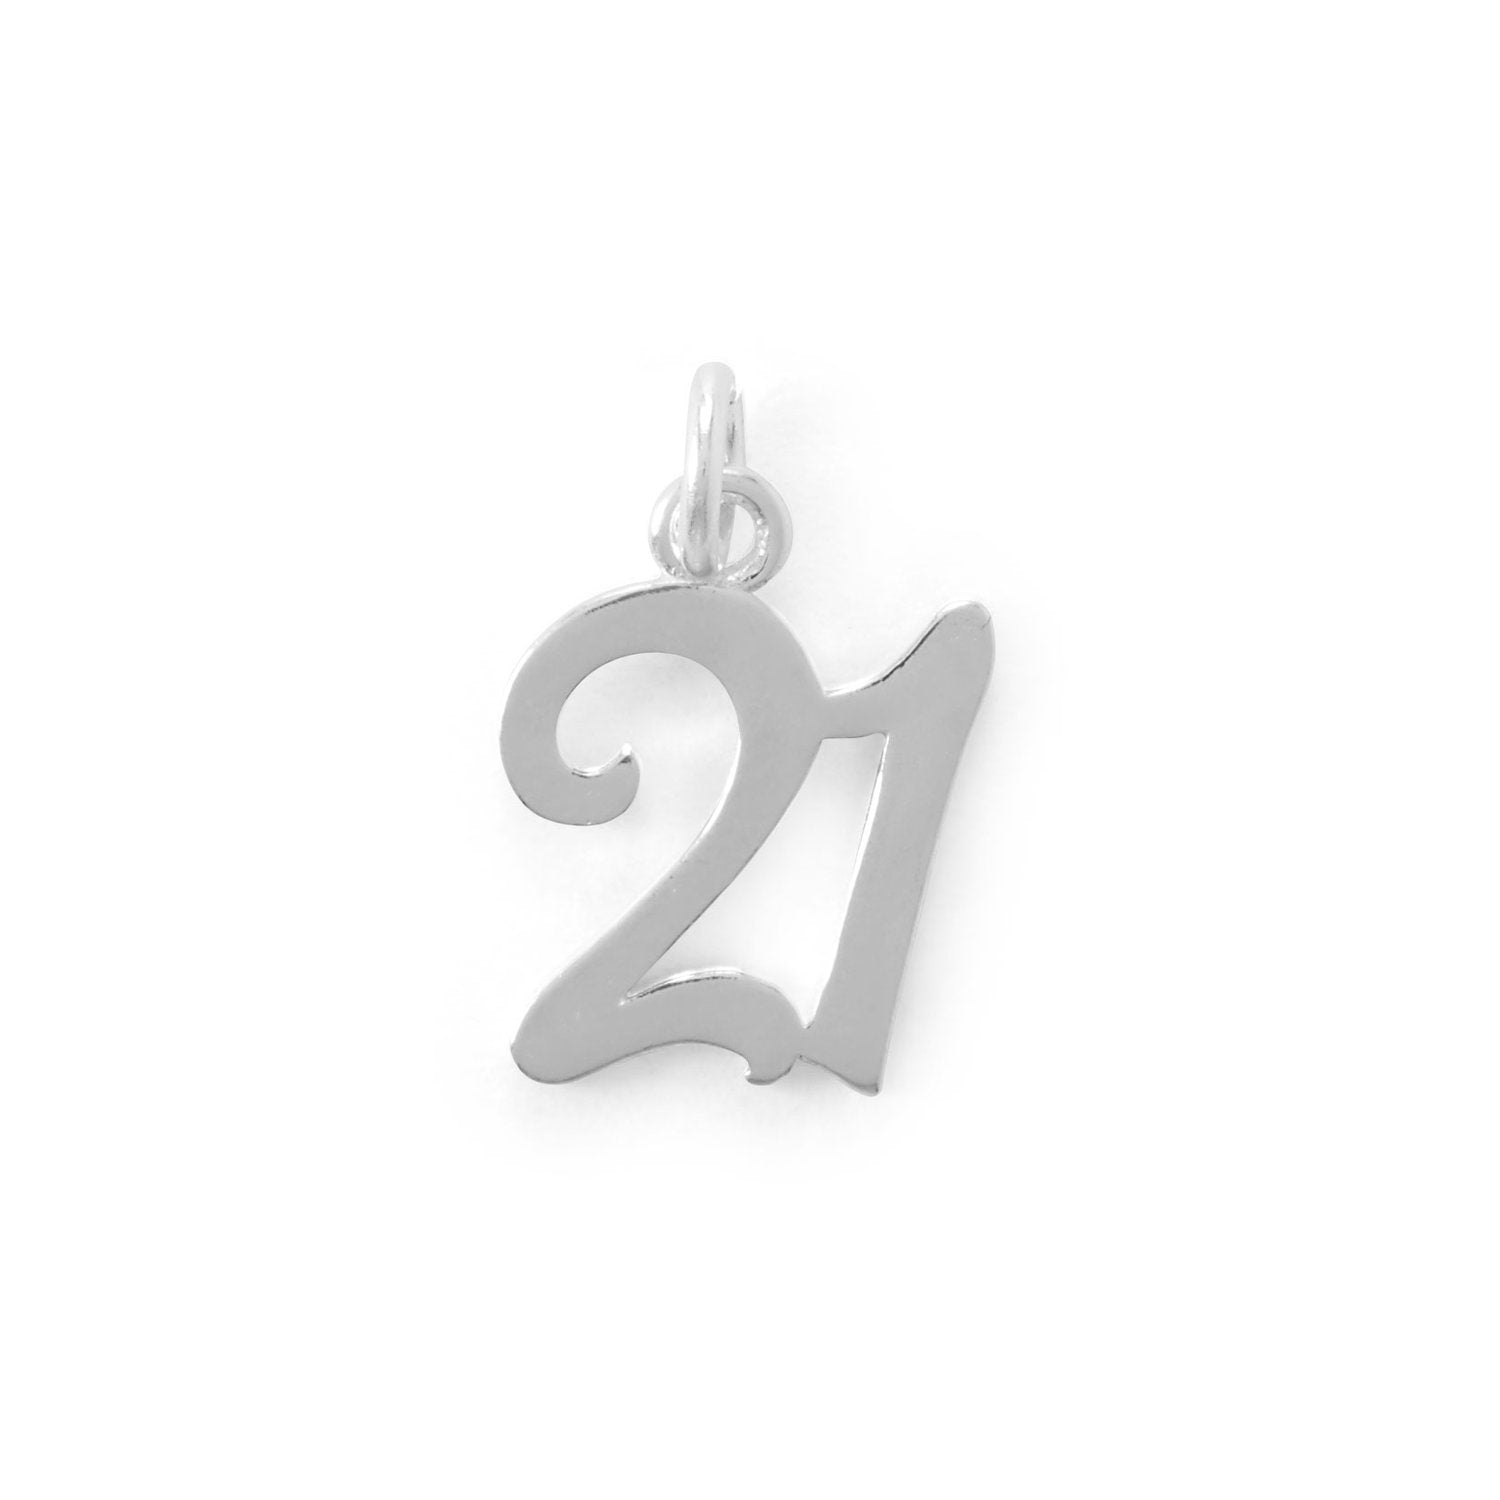 Celebrate - "21" Charm - Joyeria Lady